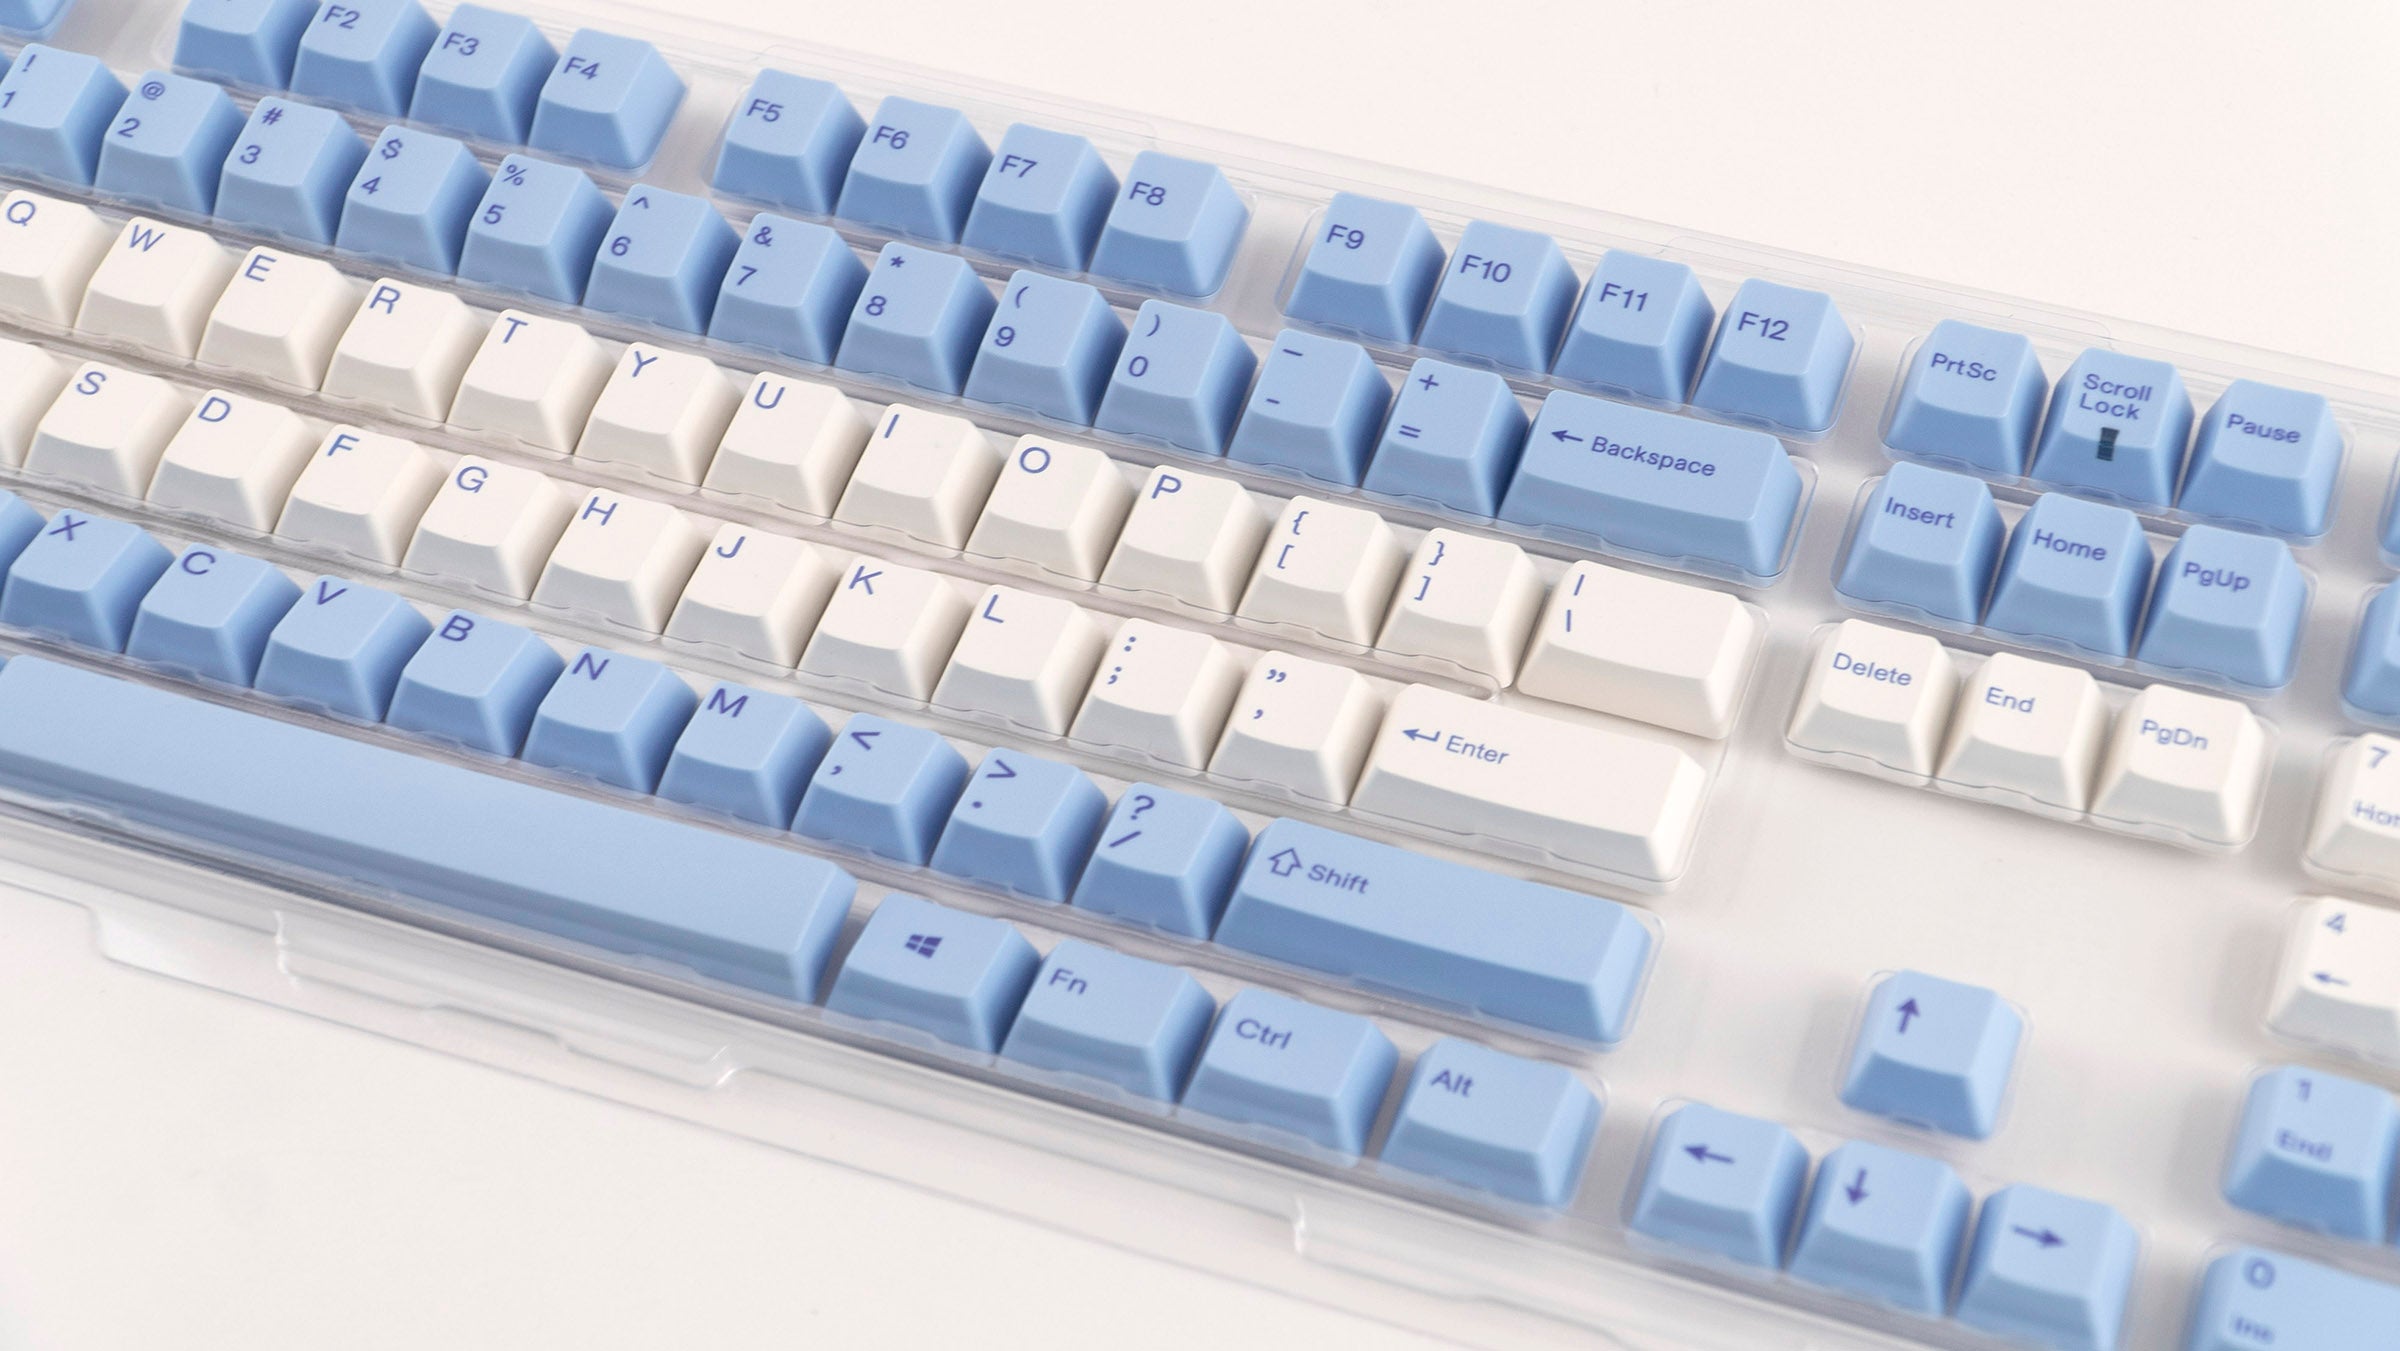 Varmilo 108-Key Dye Sub PBT Keycap Set White and Blue Santorini MKLFH60ZHH |34142|